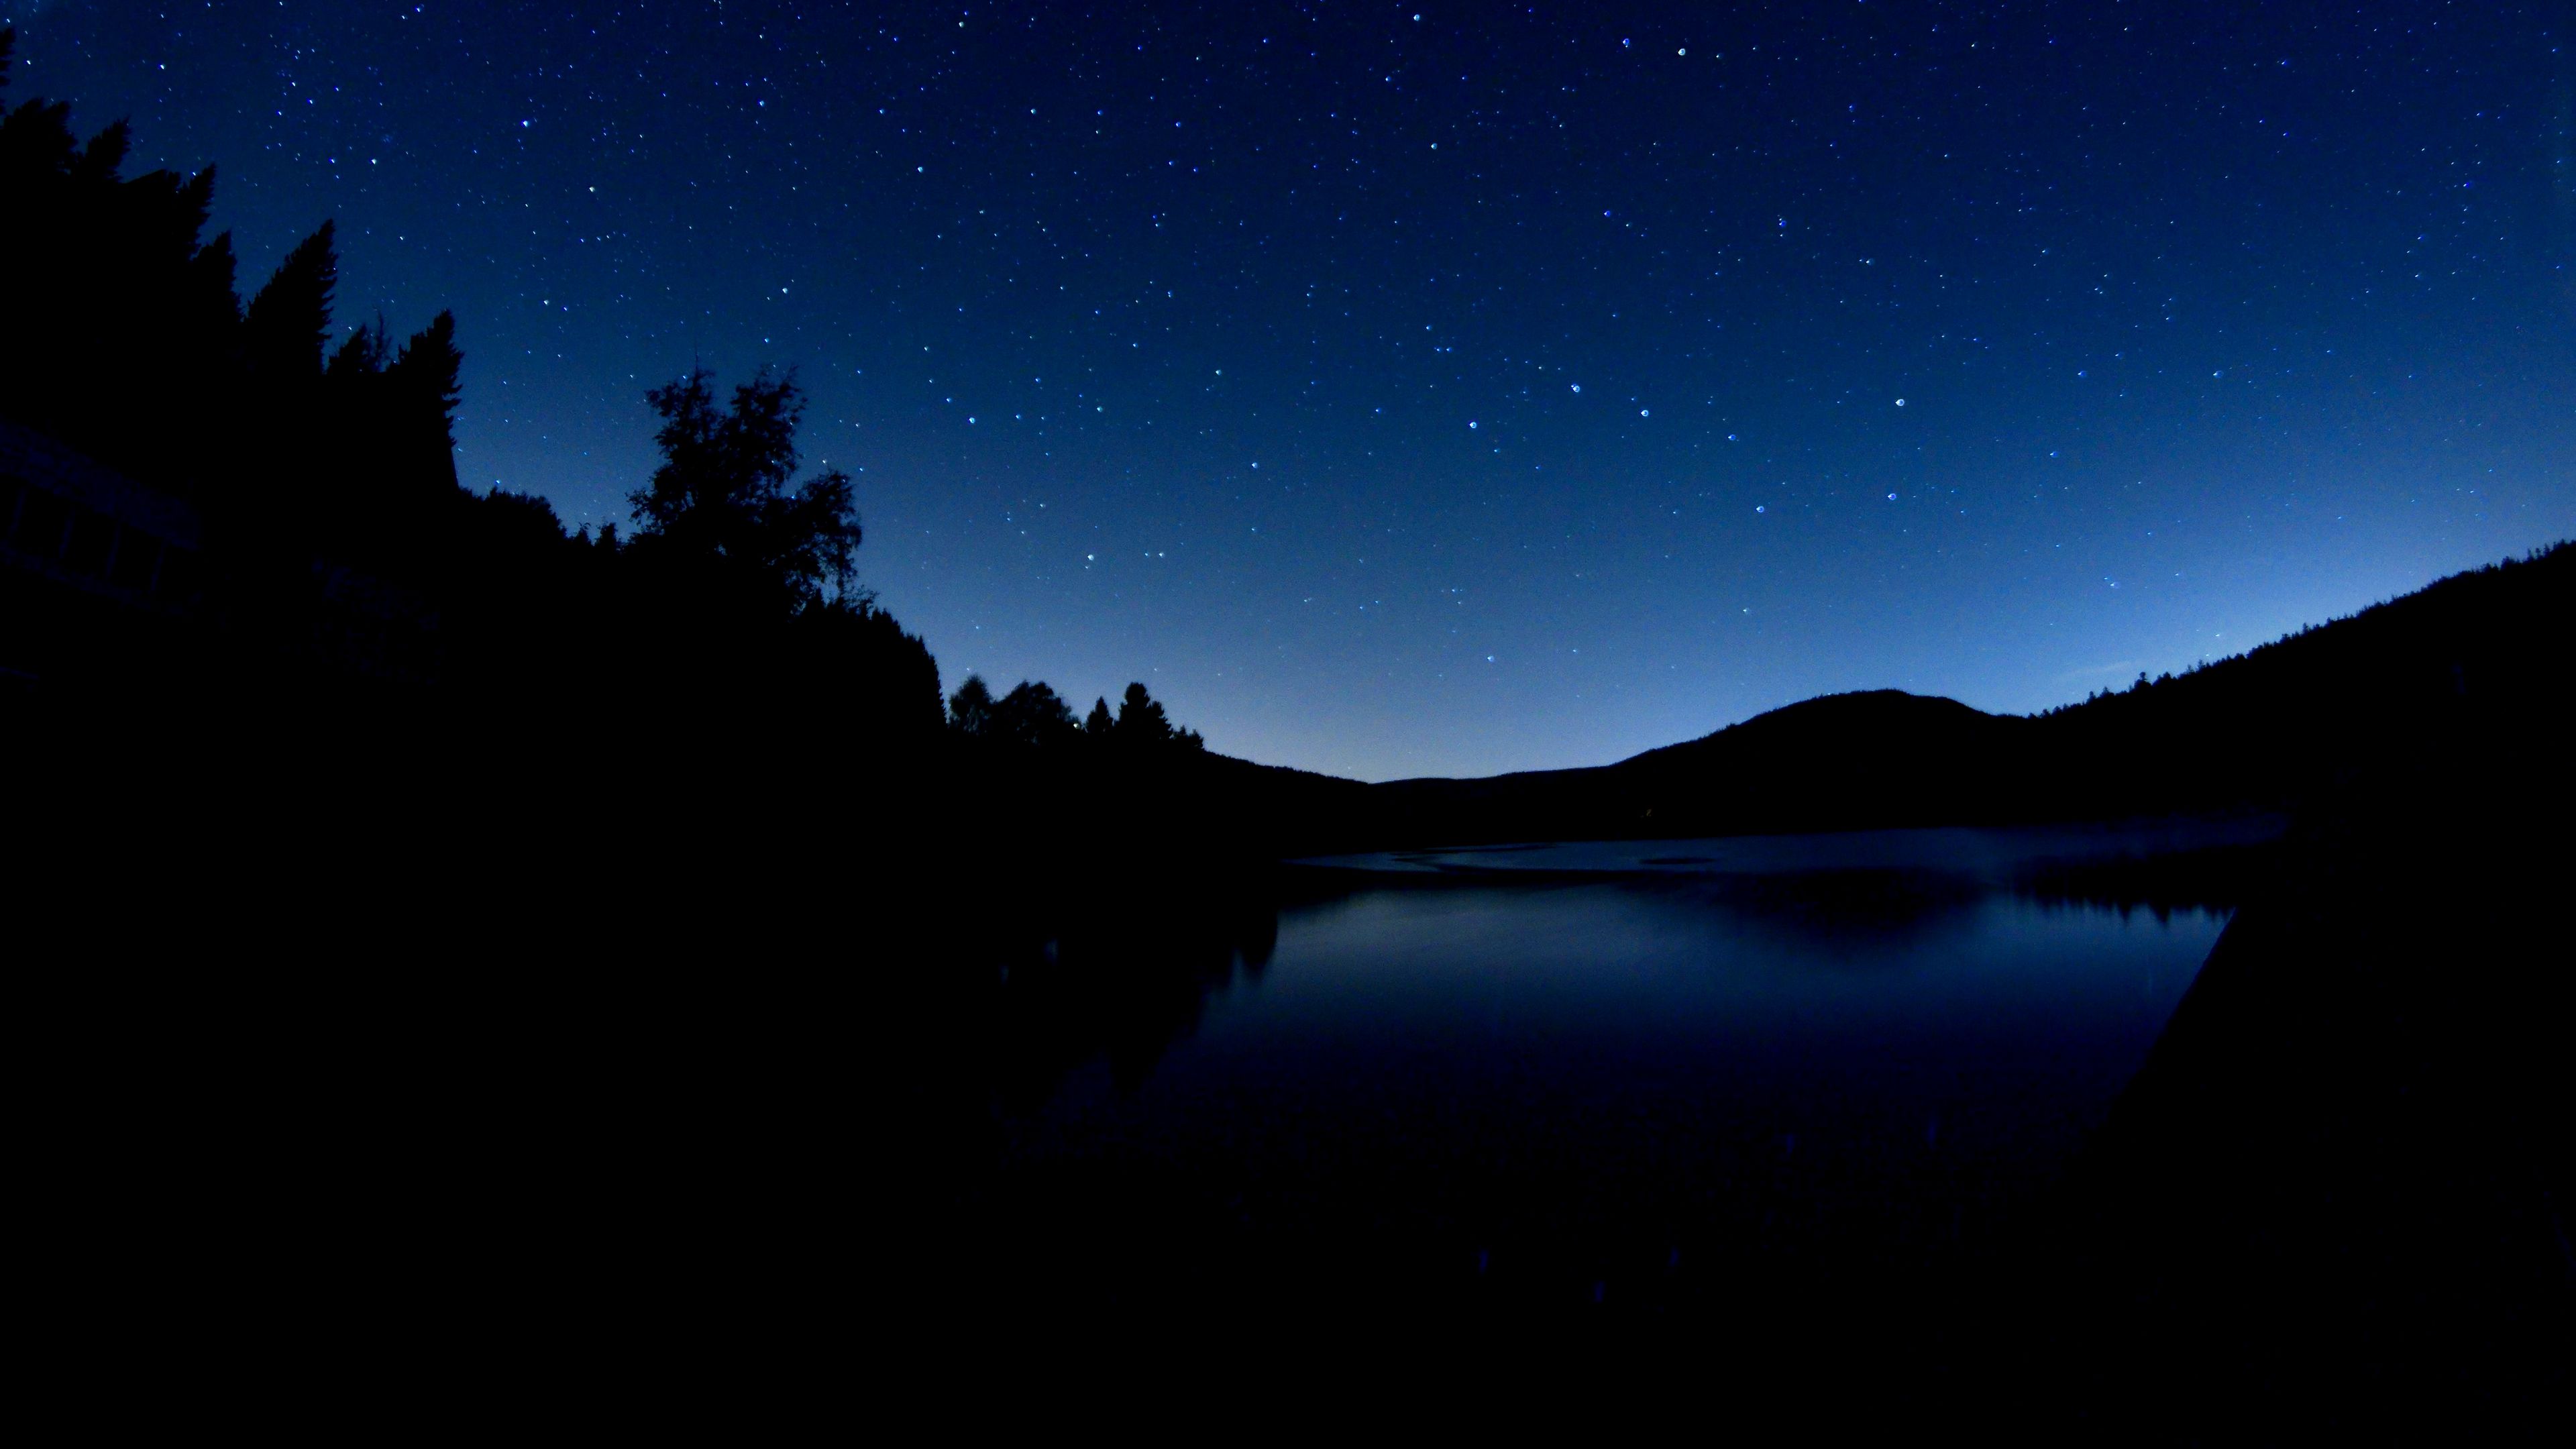 Download wallpaper 3840x2160 lake, dark, night, starry sky, landscape 4k uhd  16:9 hd background